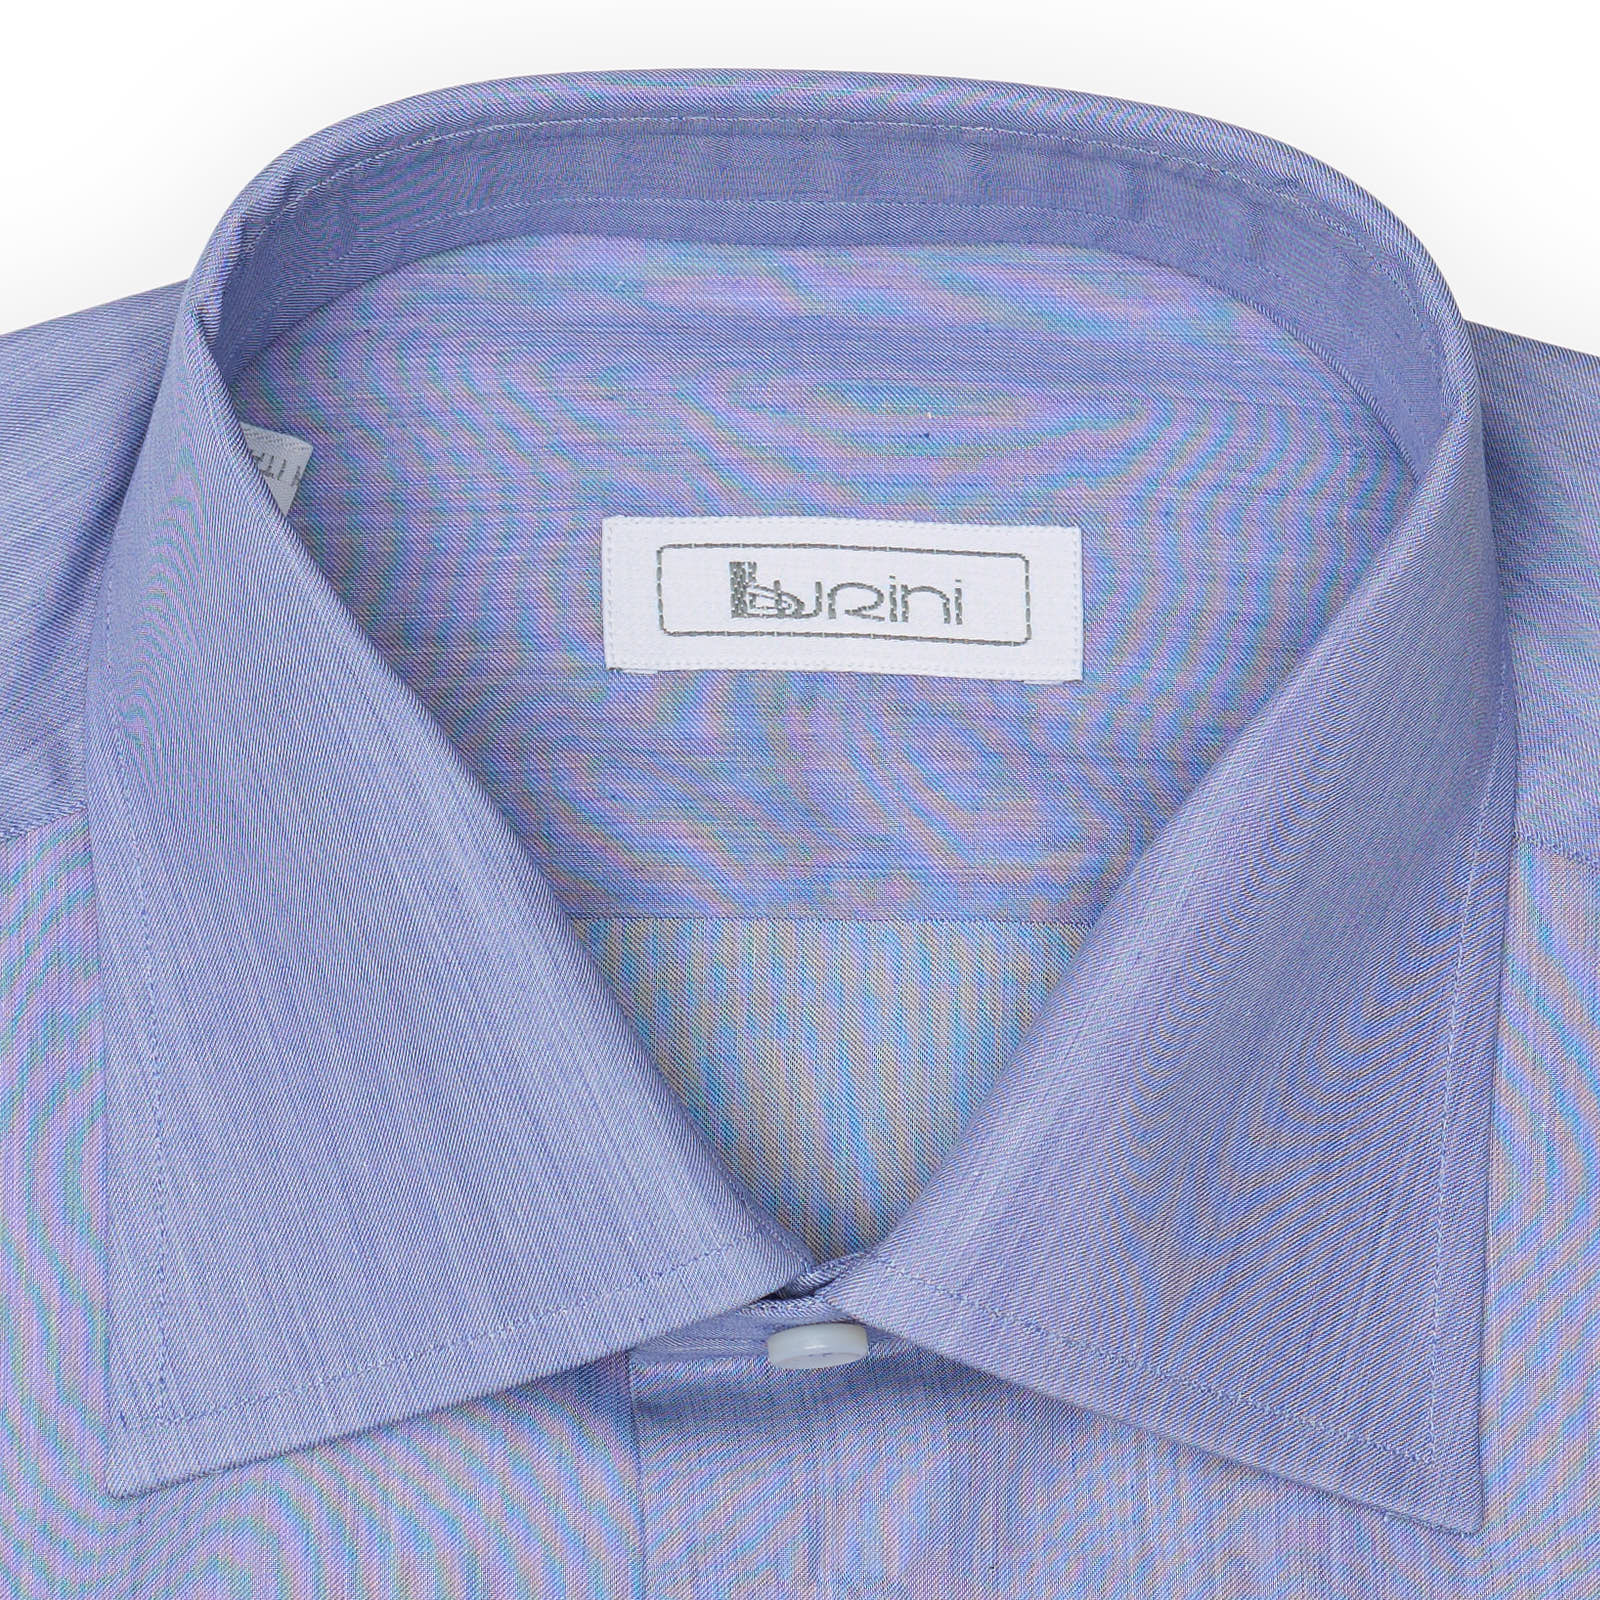 BURINI Blue End-on-end Luxury Dress Shirt EU 38 NEW US 15